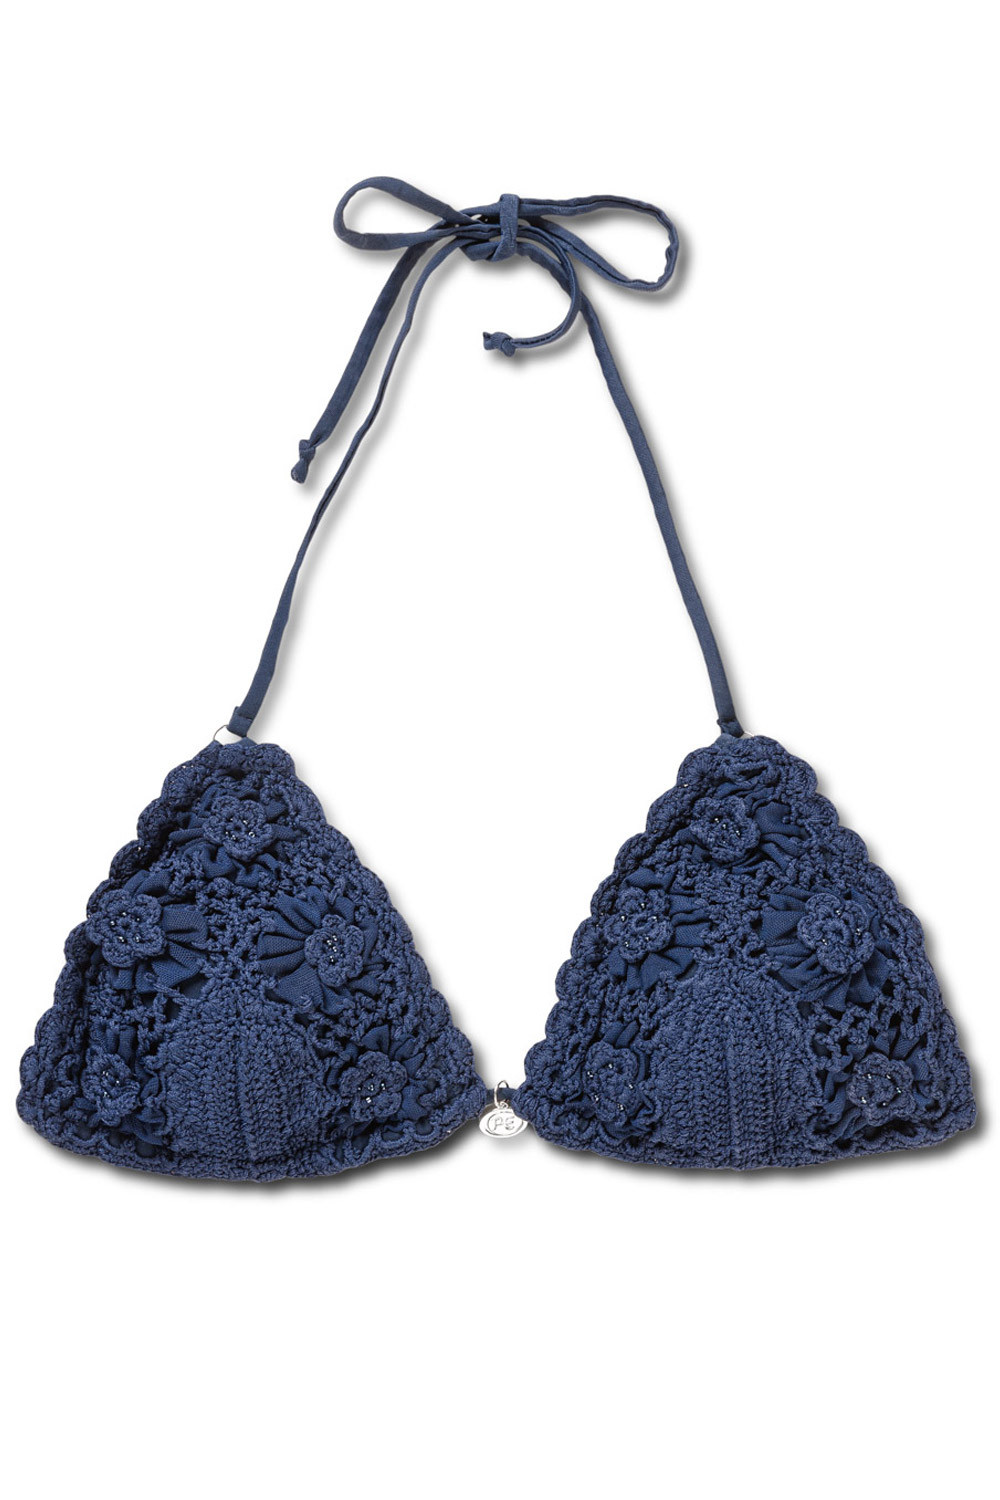 Panos Emporio Kandia Crochet Bikini Top Navy Blauw